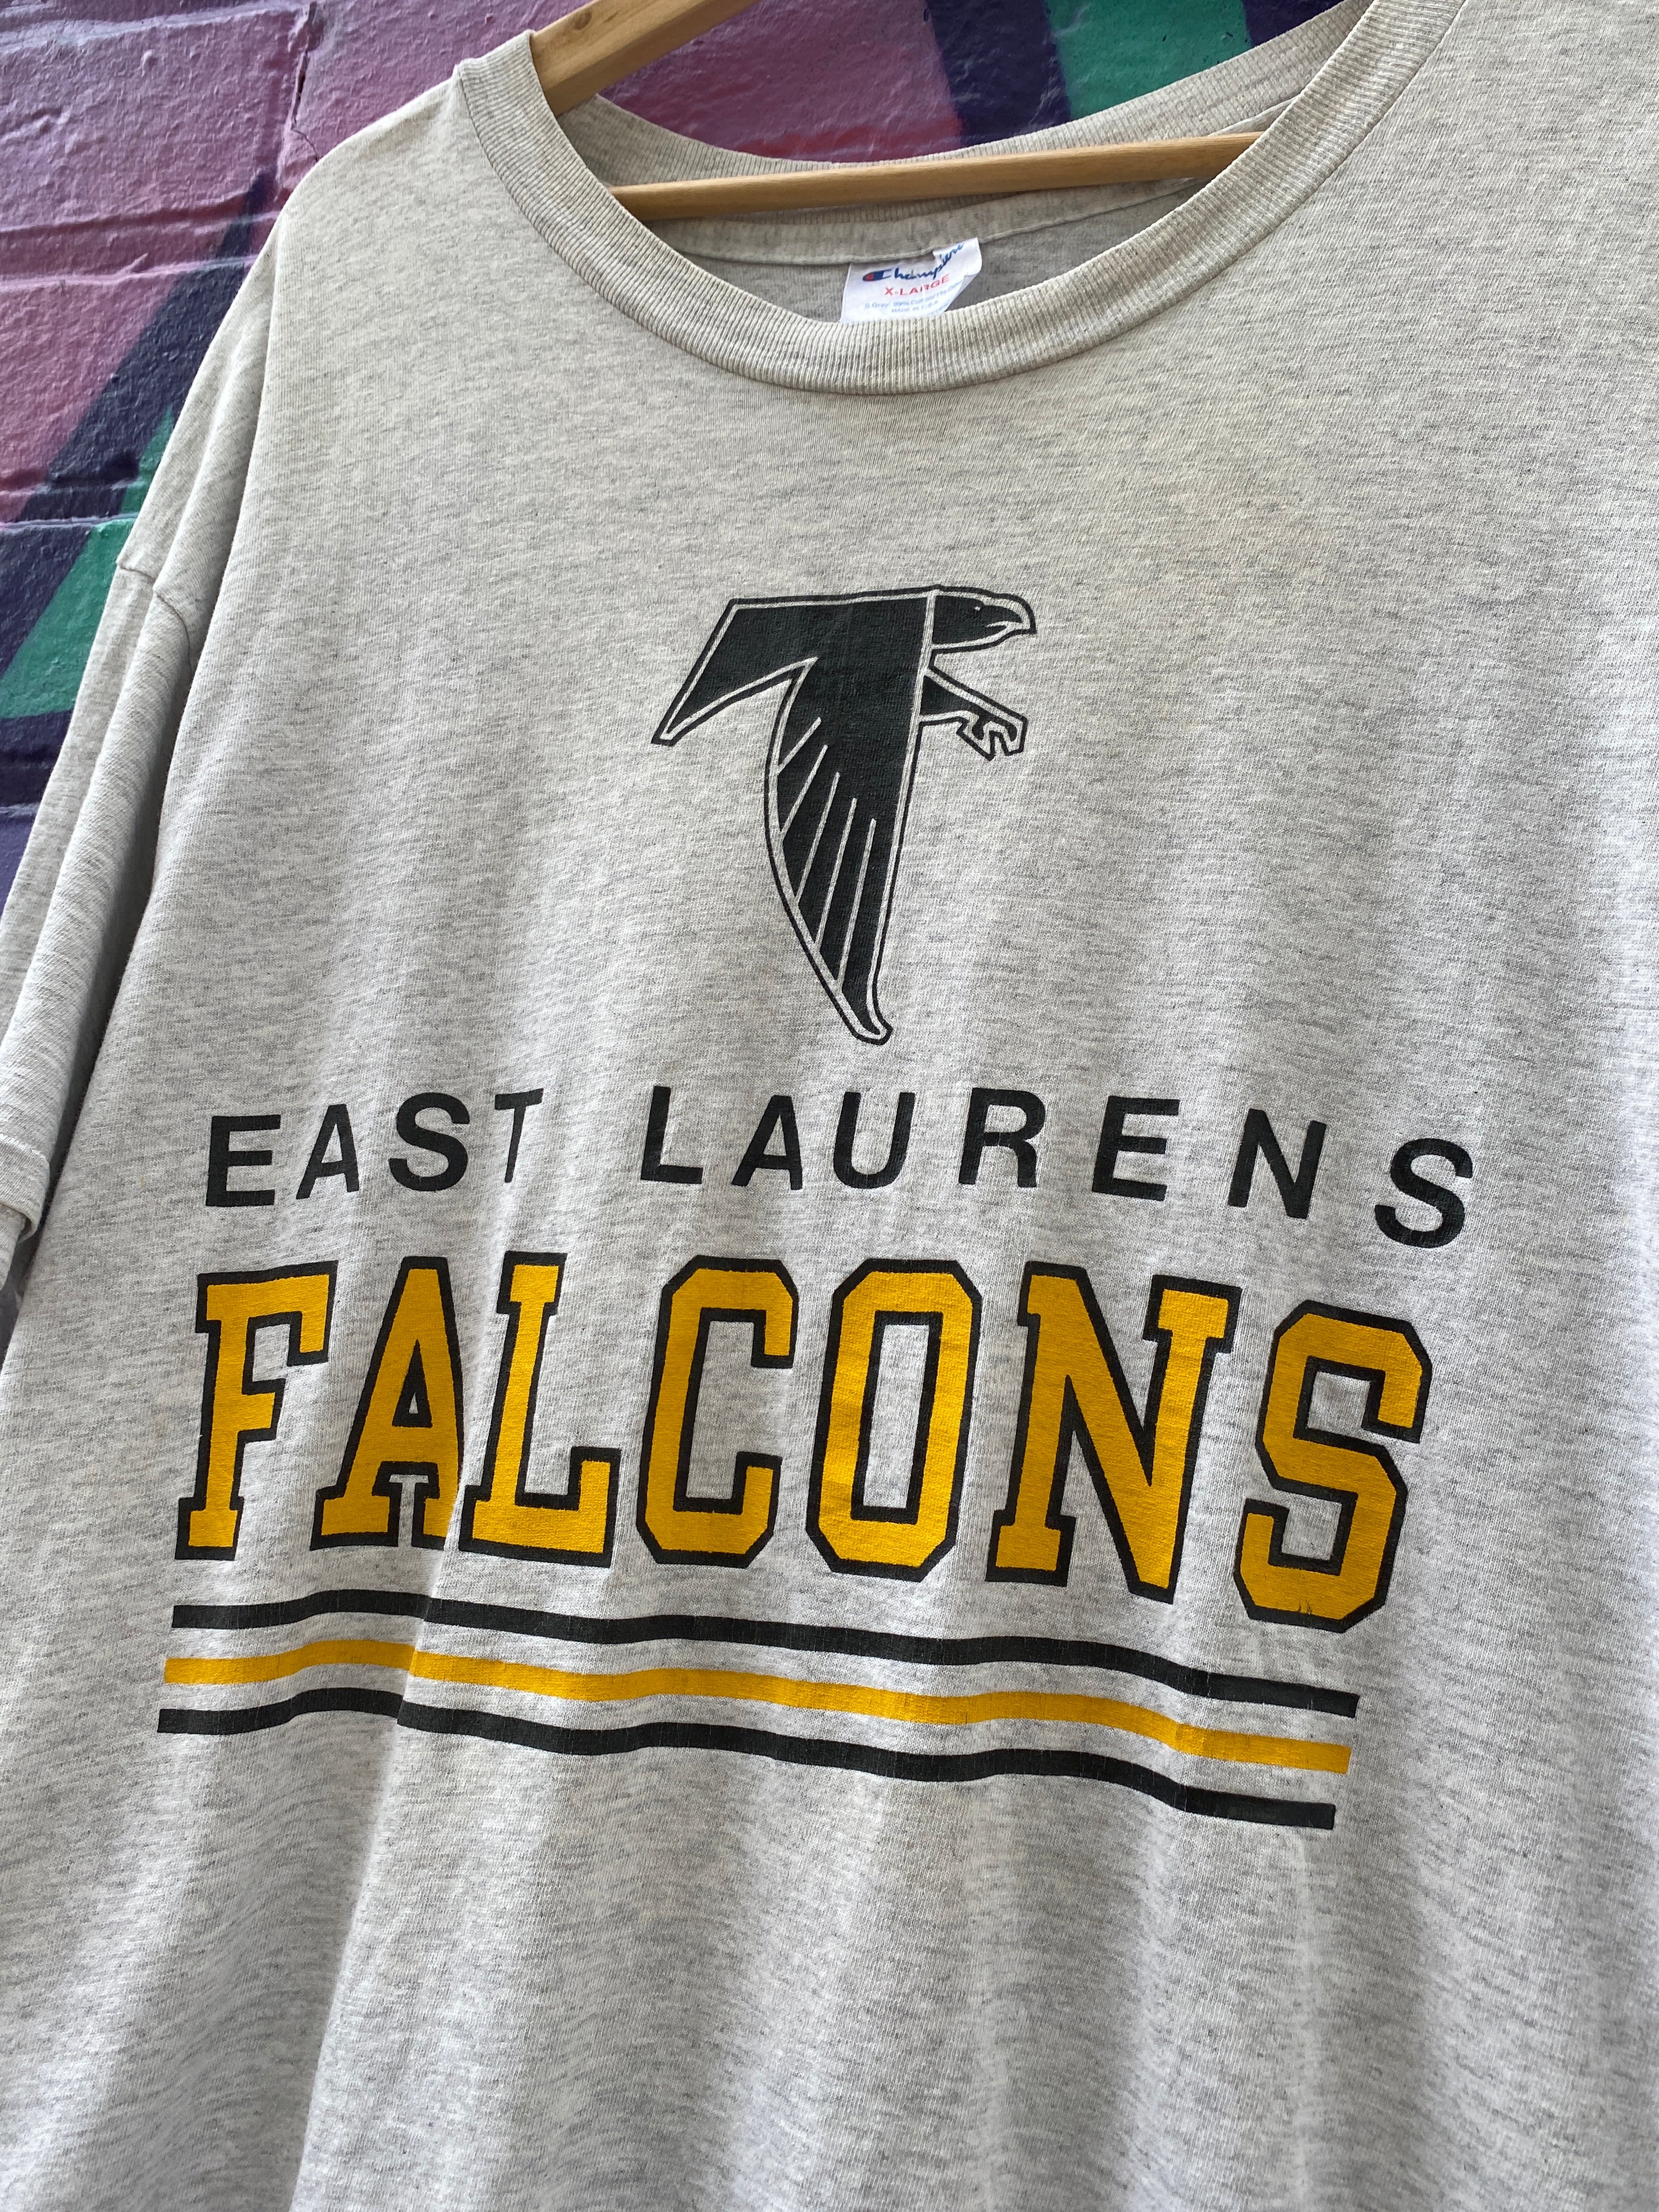 XL - East Laurens Falcons Tee